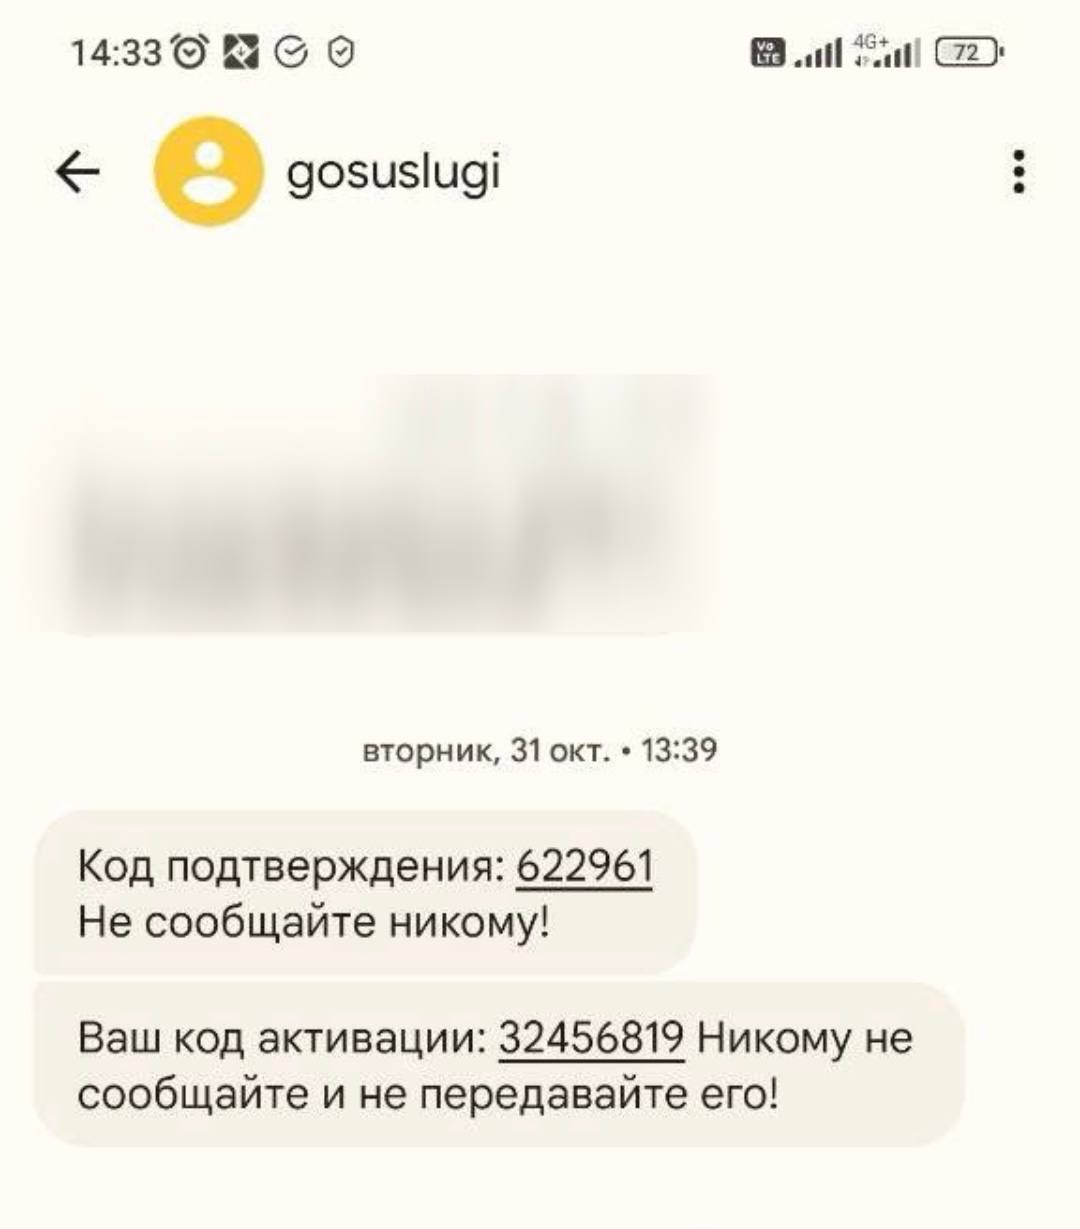 Жителей Башкирии предупреждают о мошенничестве через Госуслуги 